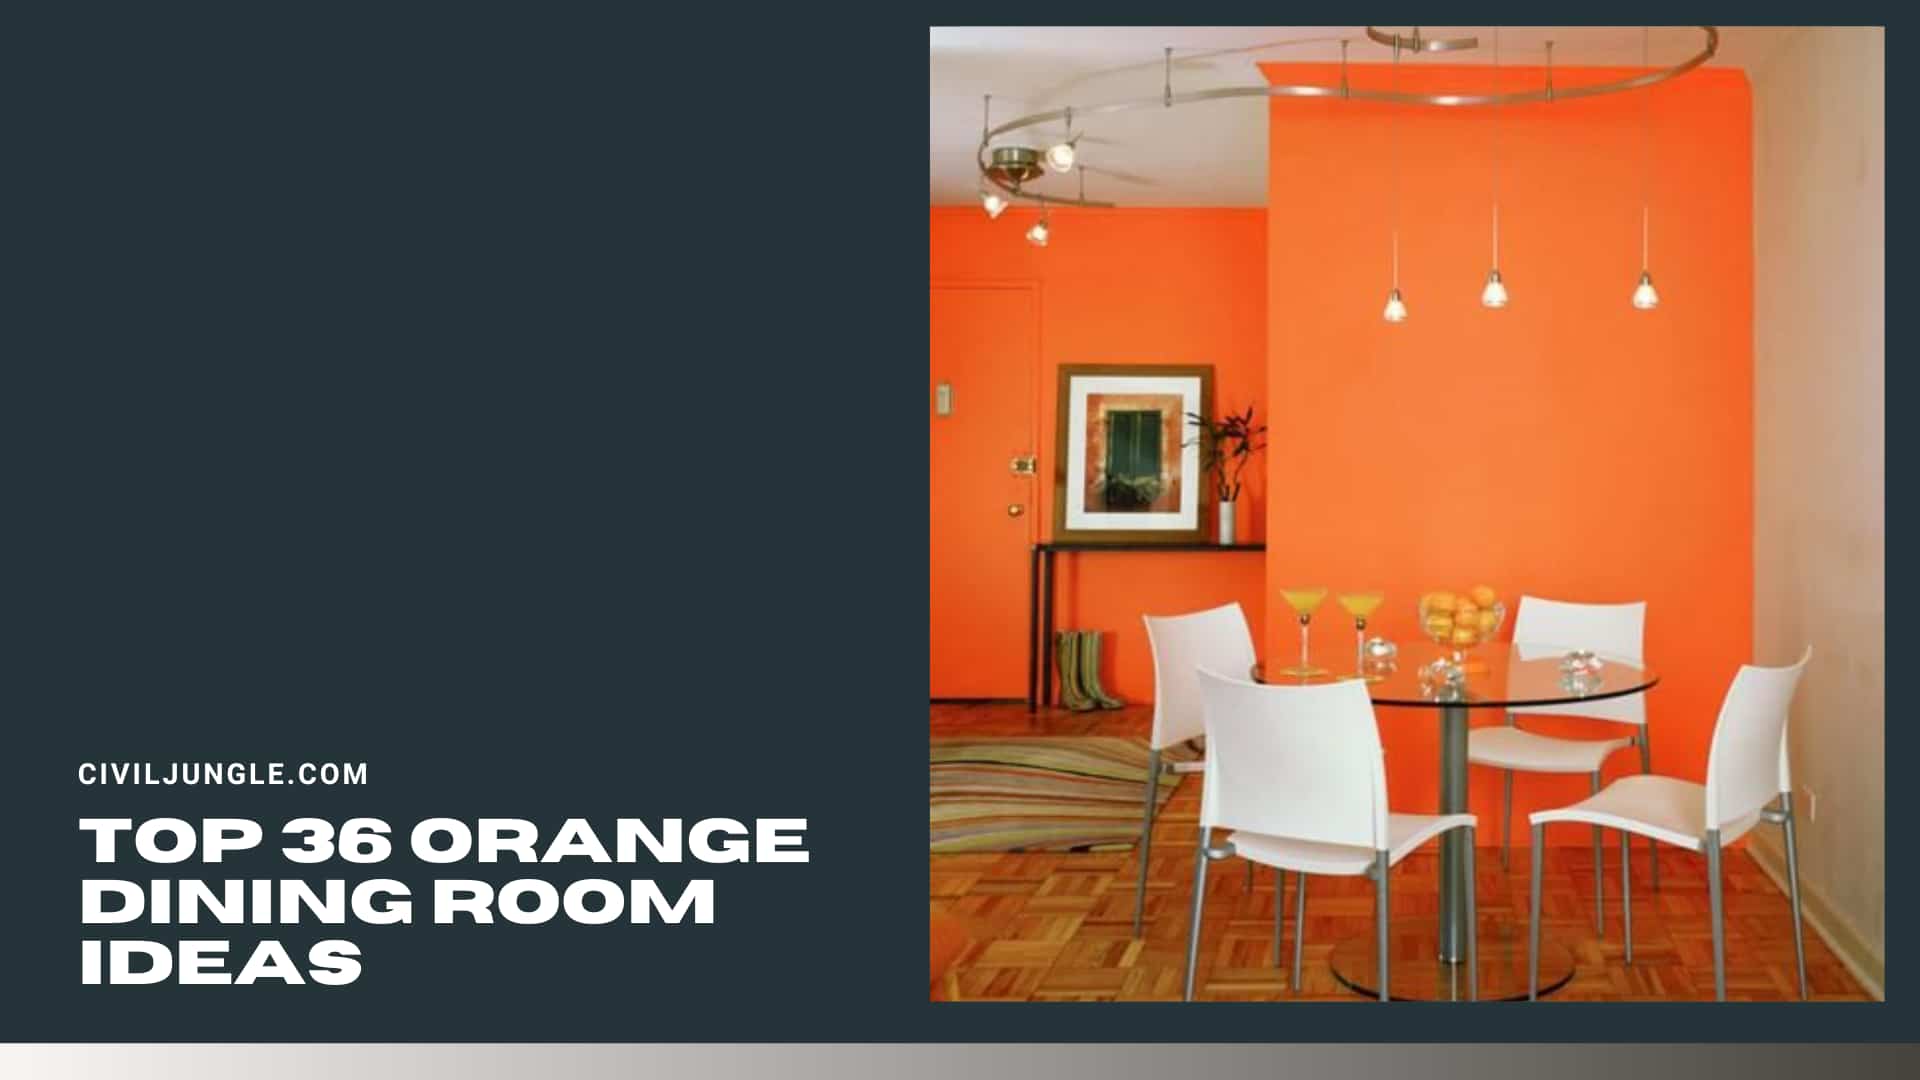 Top 36 Orange Dining Room Ideas